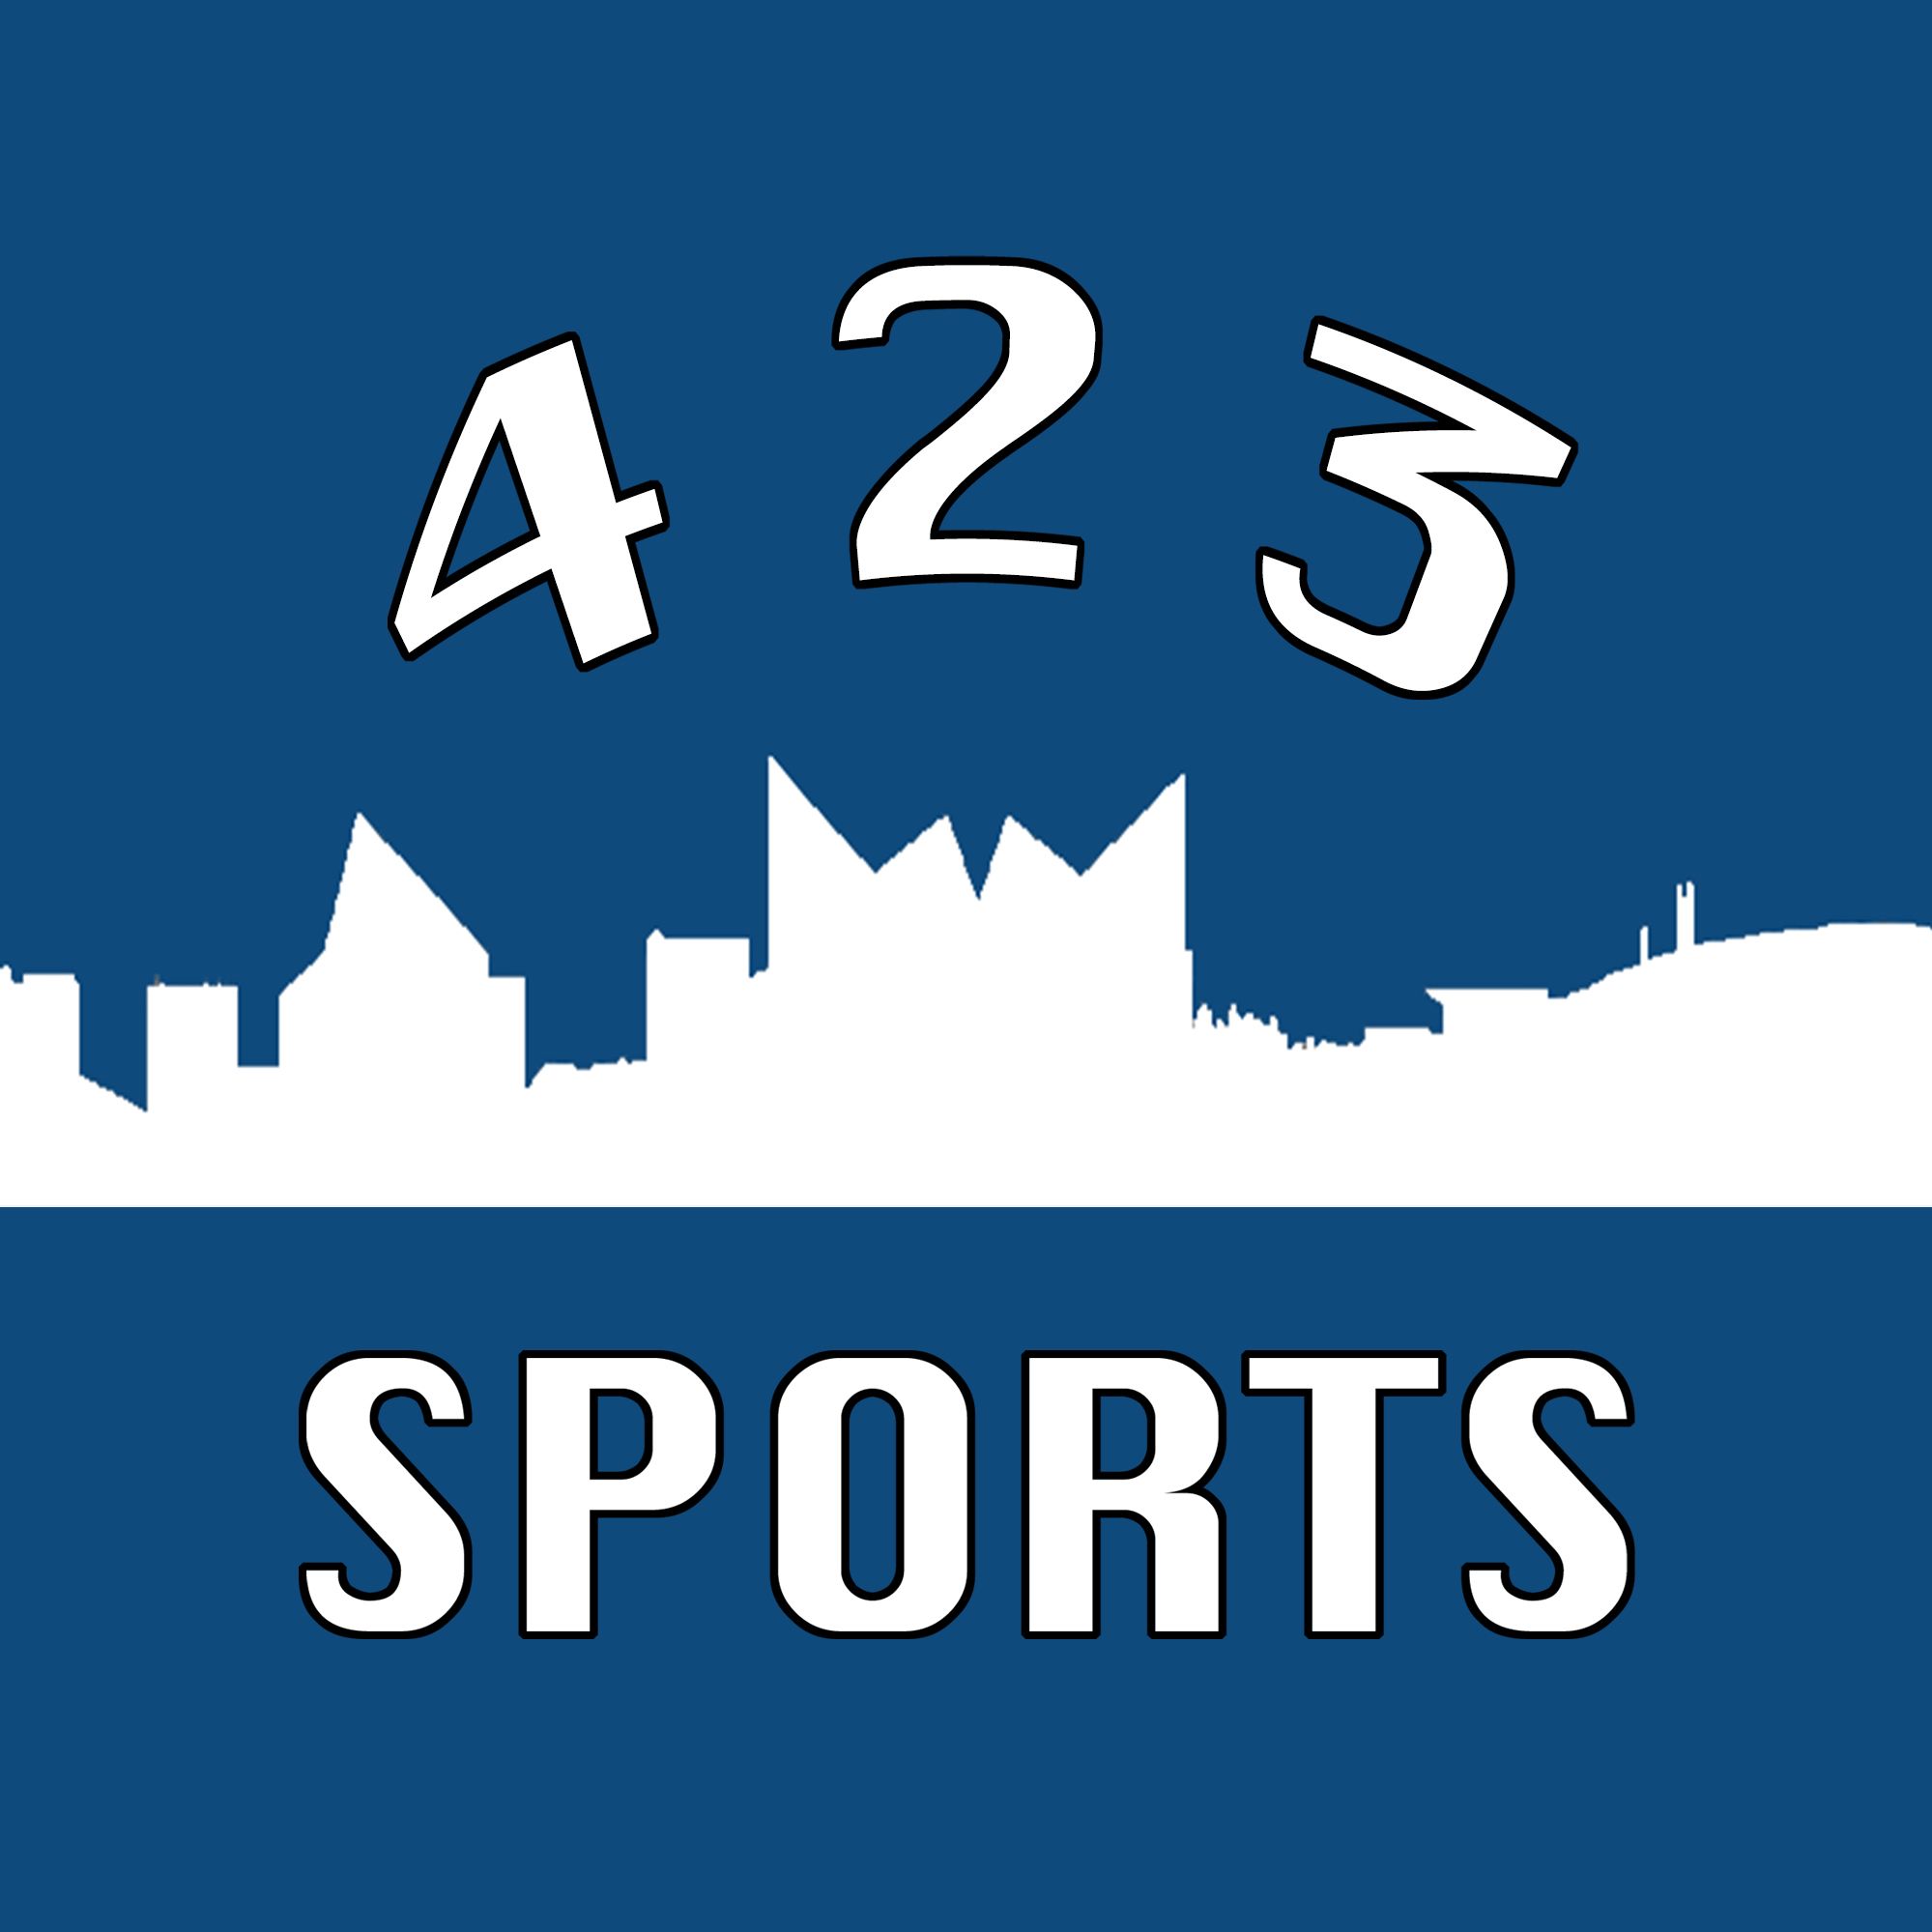 423 Sports